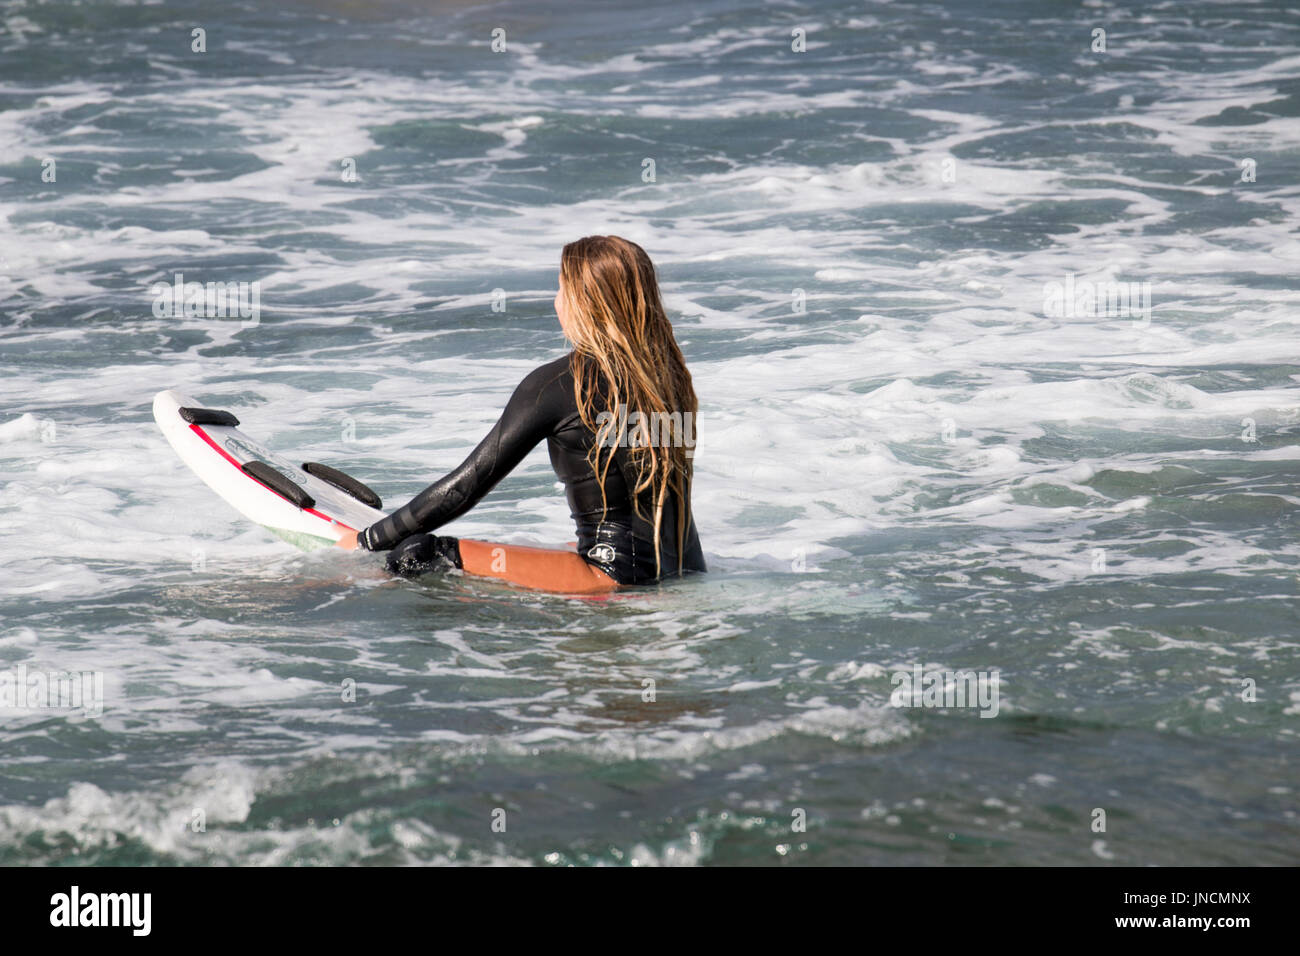 Australian surfer girl in Sydney at the beach with surfboard surfing in the ocean,Sydney,Australia Stock Photo Alamy